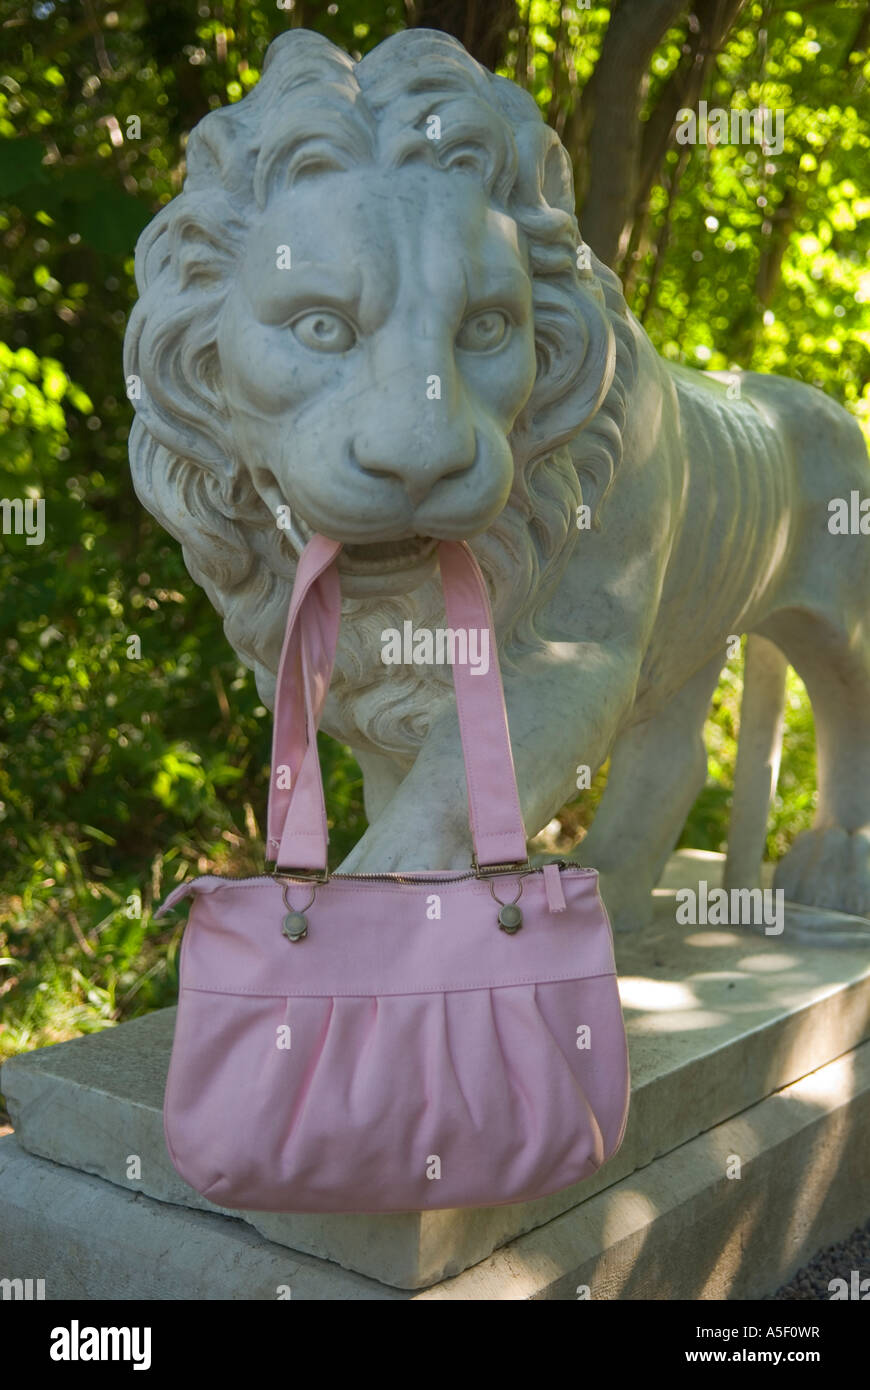 Lion with handbag. Stock Photo